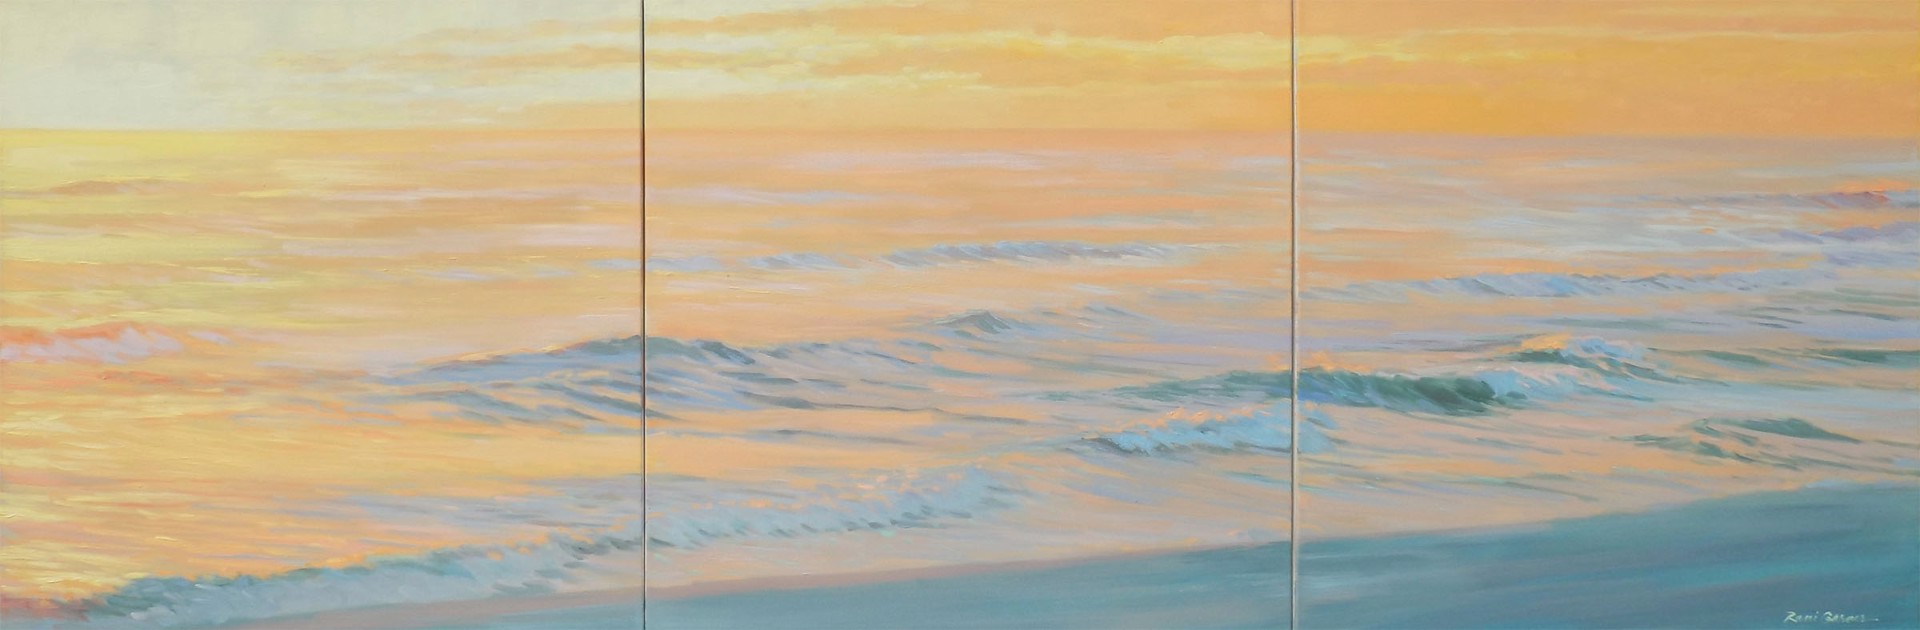 Pastel Waves by Rani Garner